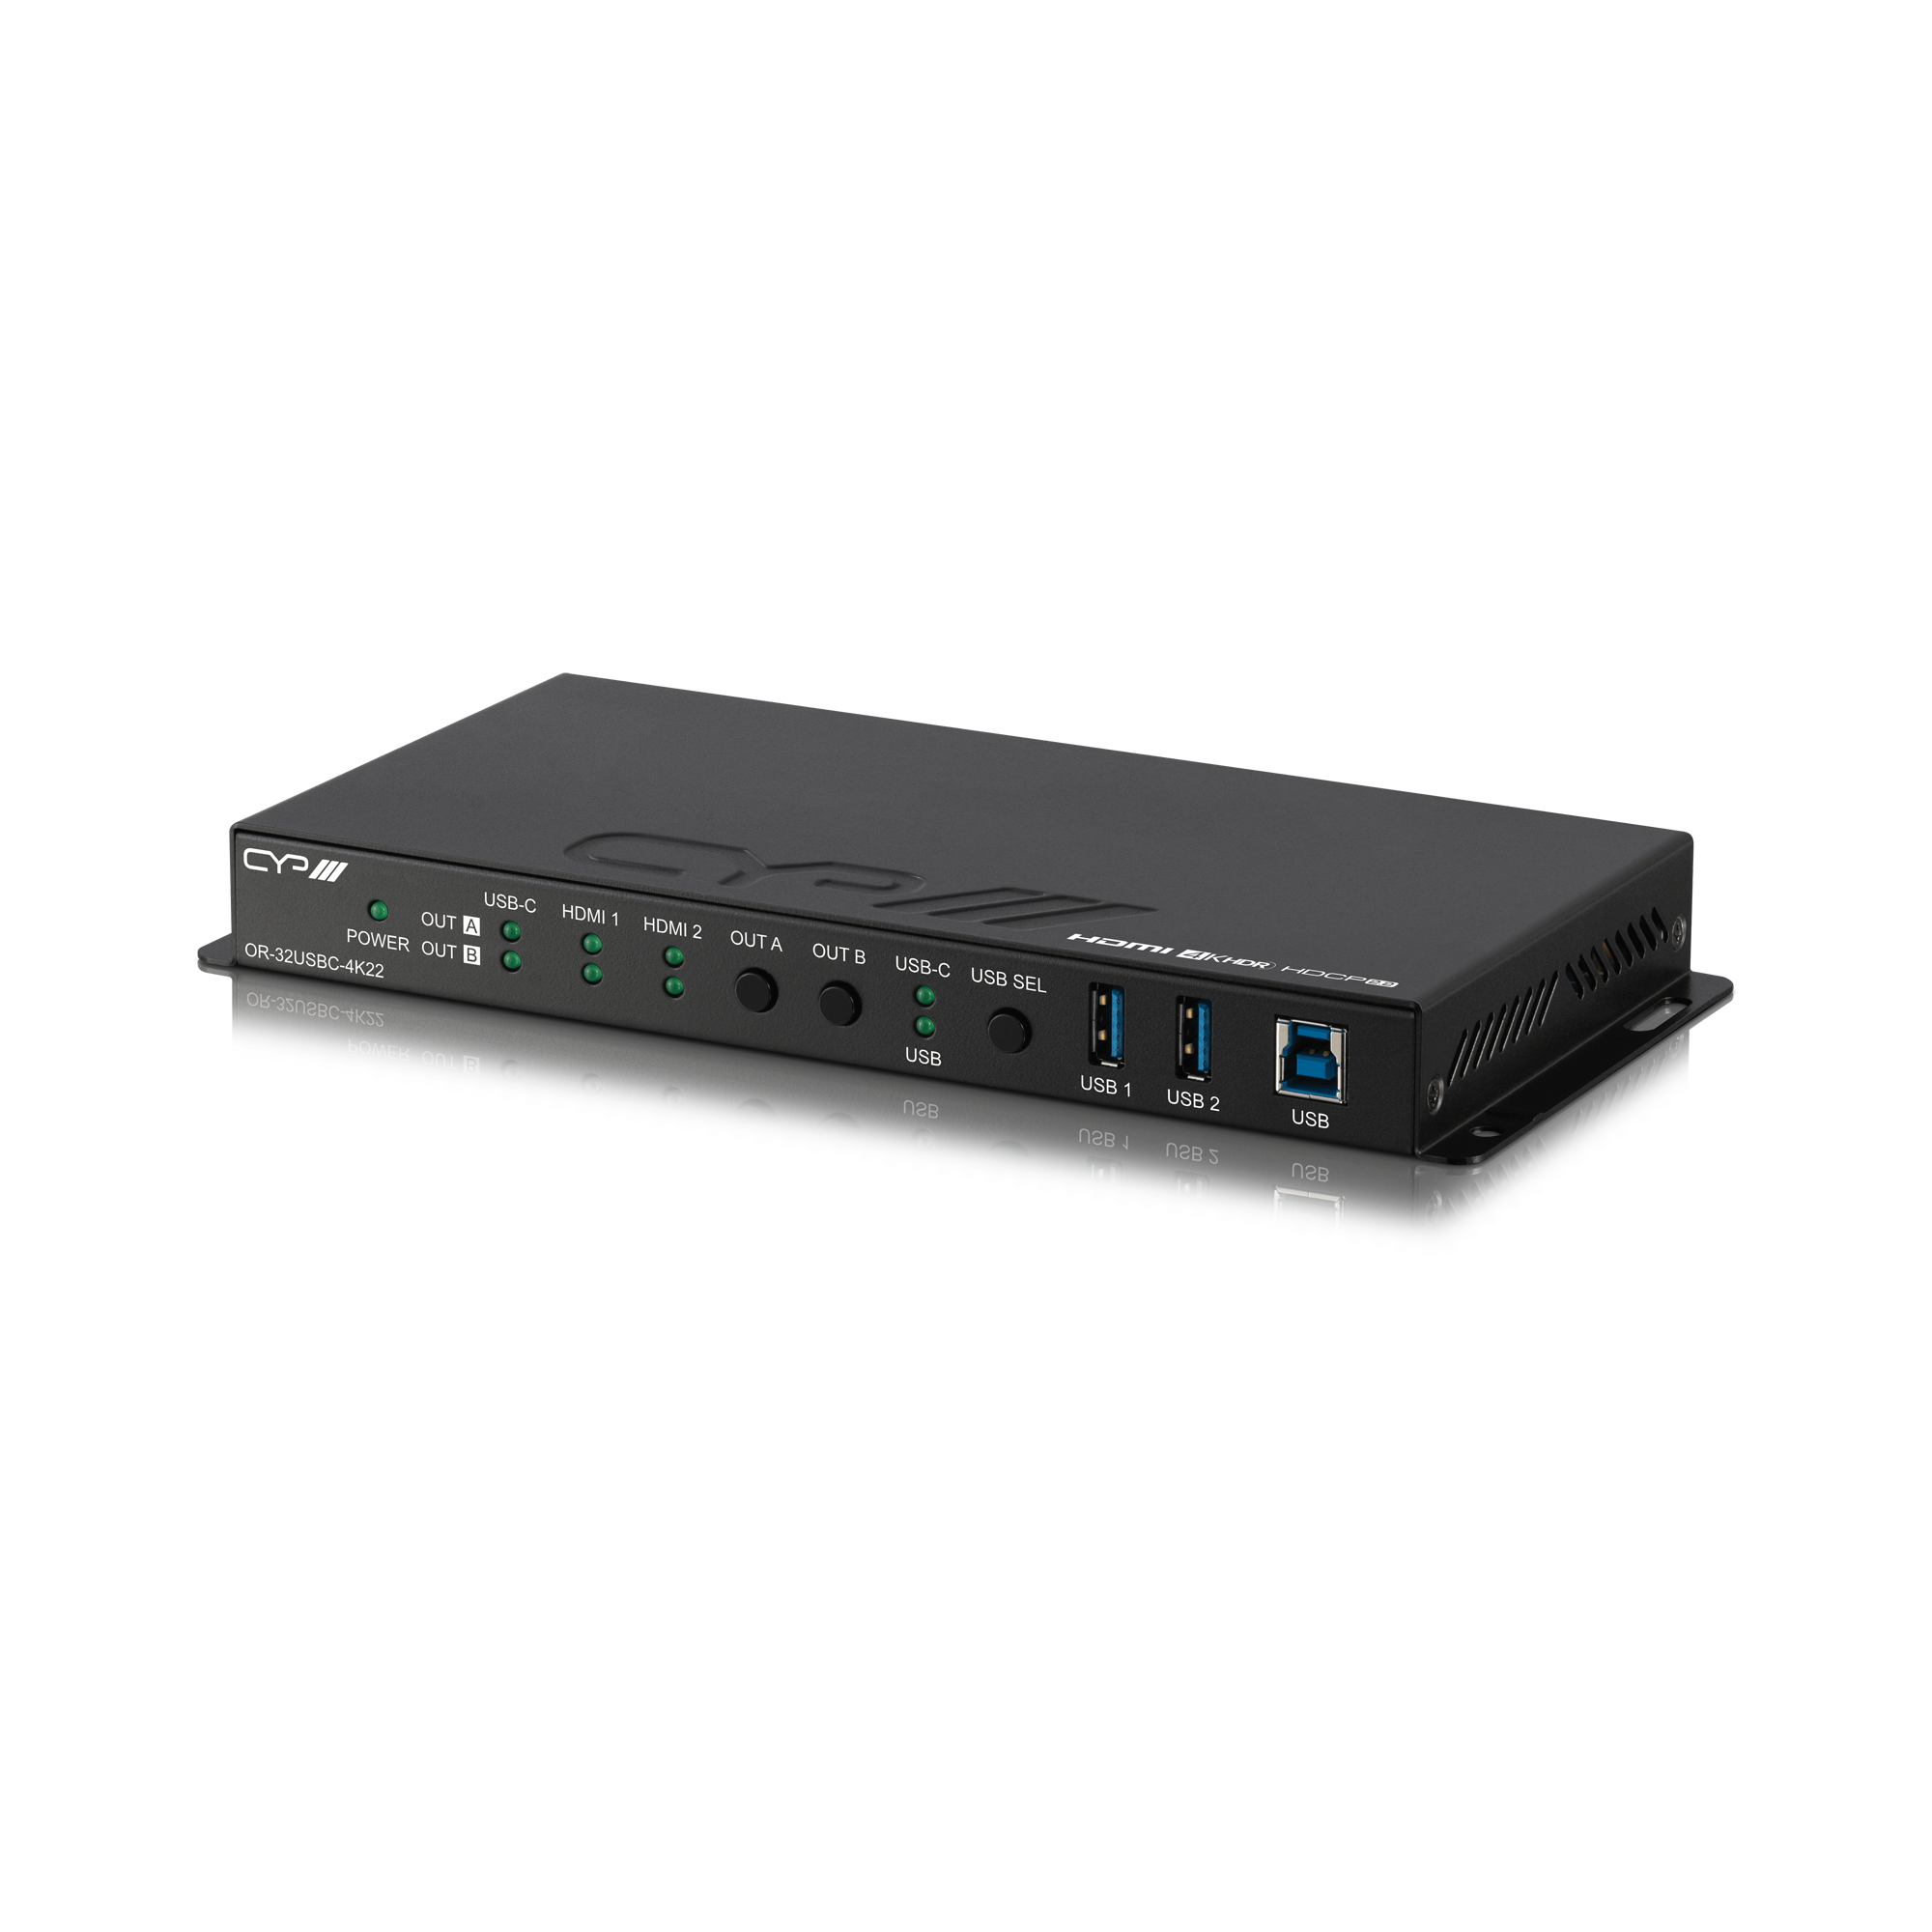 OR-32USBC-4K22 UHD+ 3x2 Matrix Switcher with USB Ethernet Hub